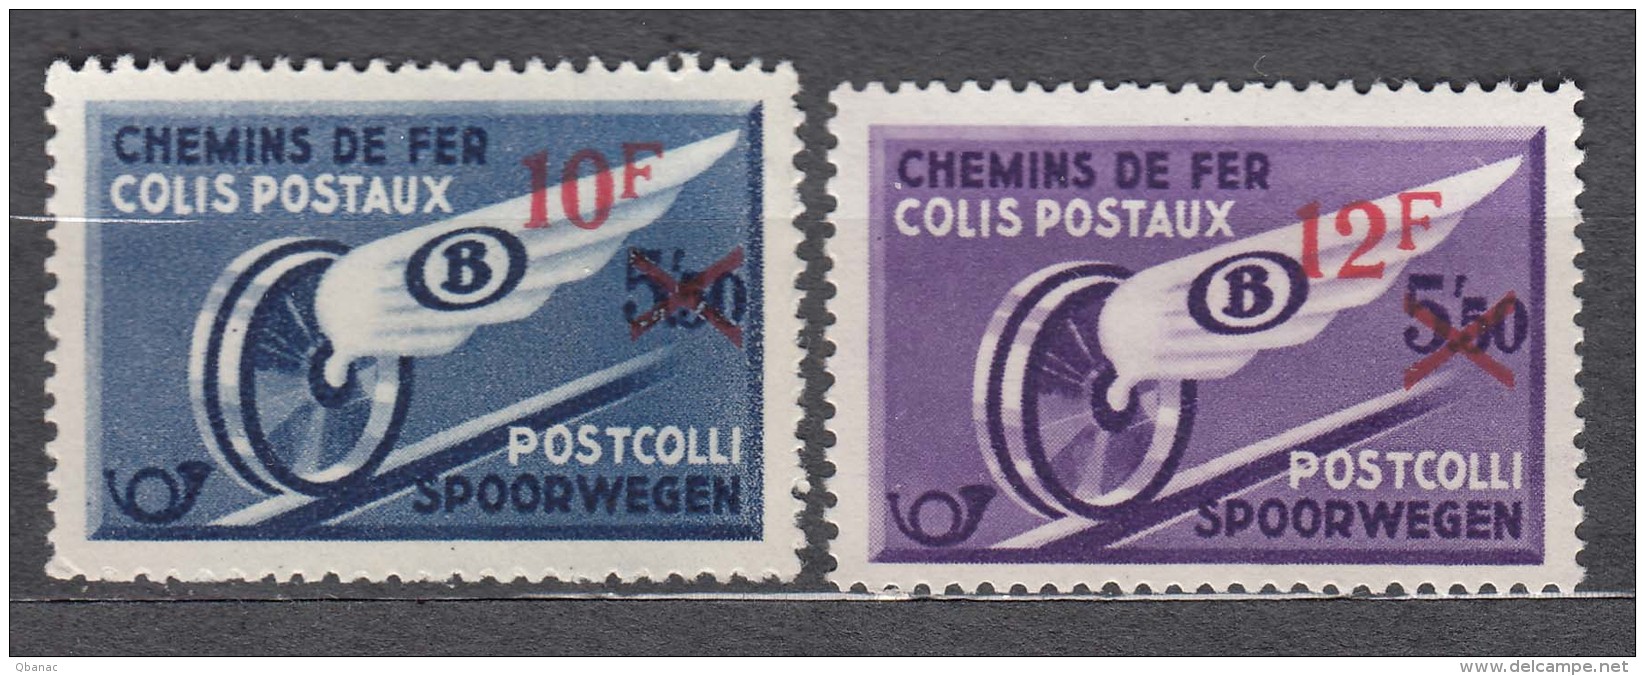 Belgium Postpaket Stamps, Mint Hinged - Equipaje [BA]